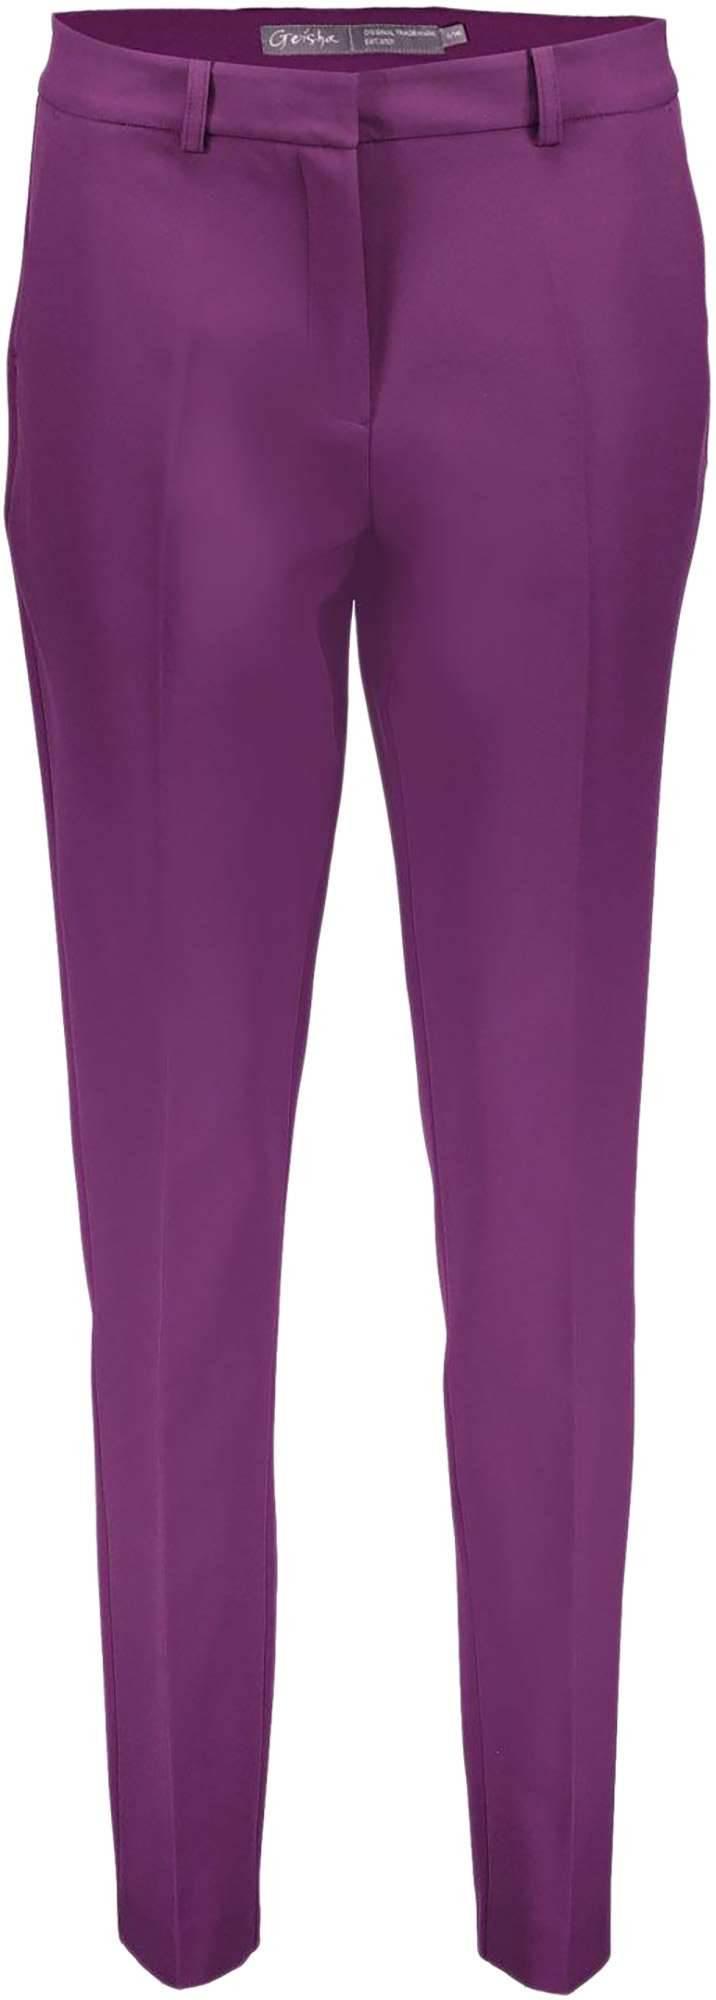 Afbeelding van Geisha Pants purple